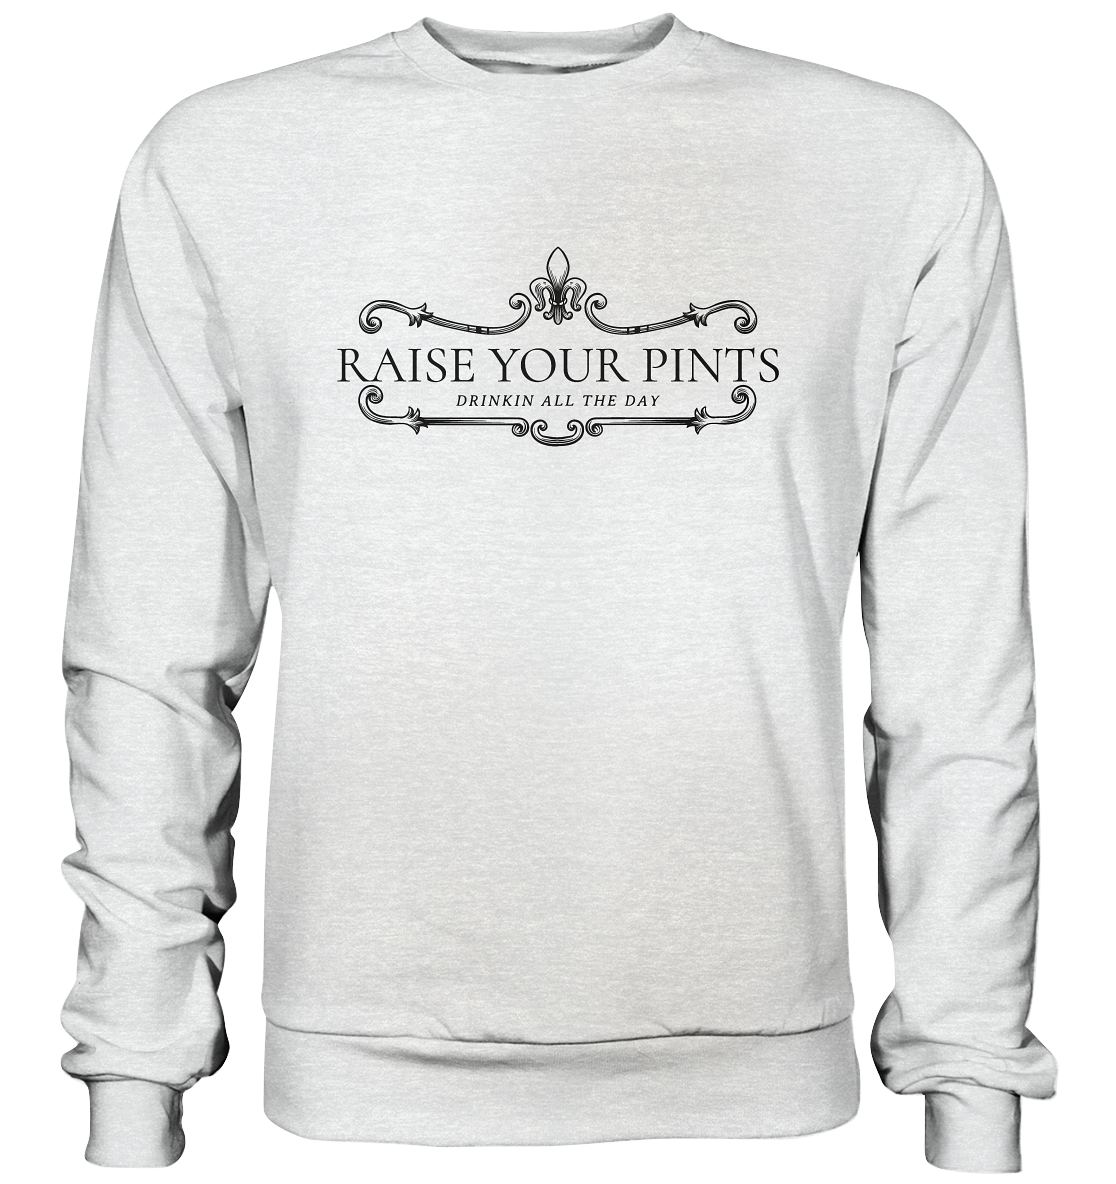 Raise Your Pints "Drinking All The Day" - Premium Sweatshirt